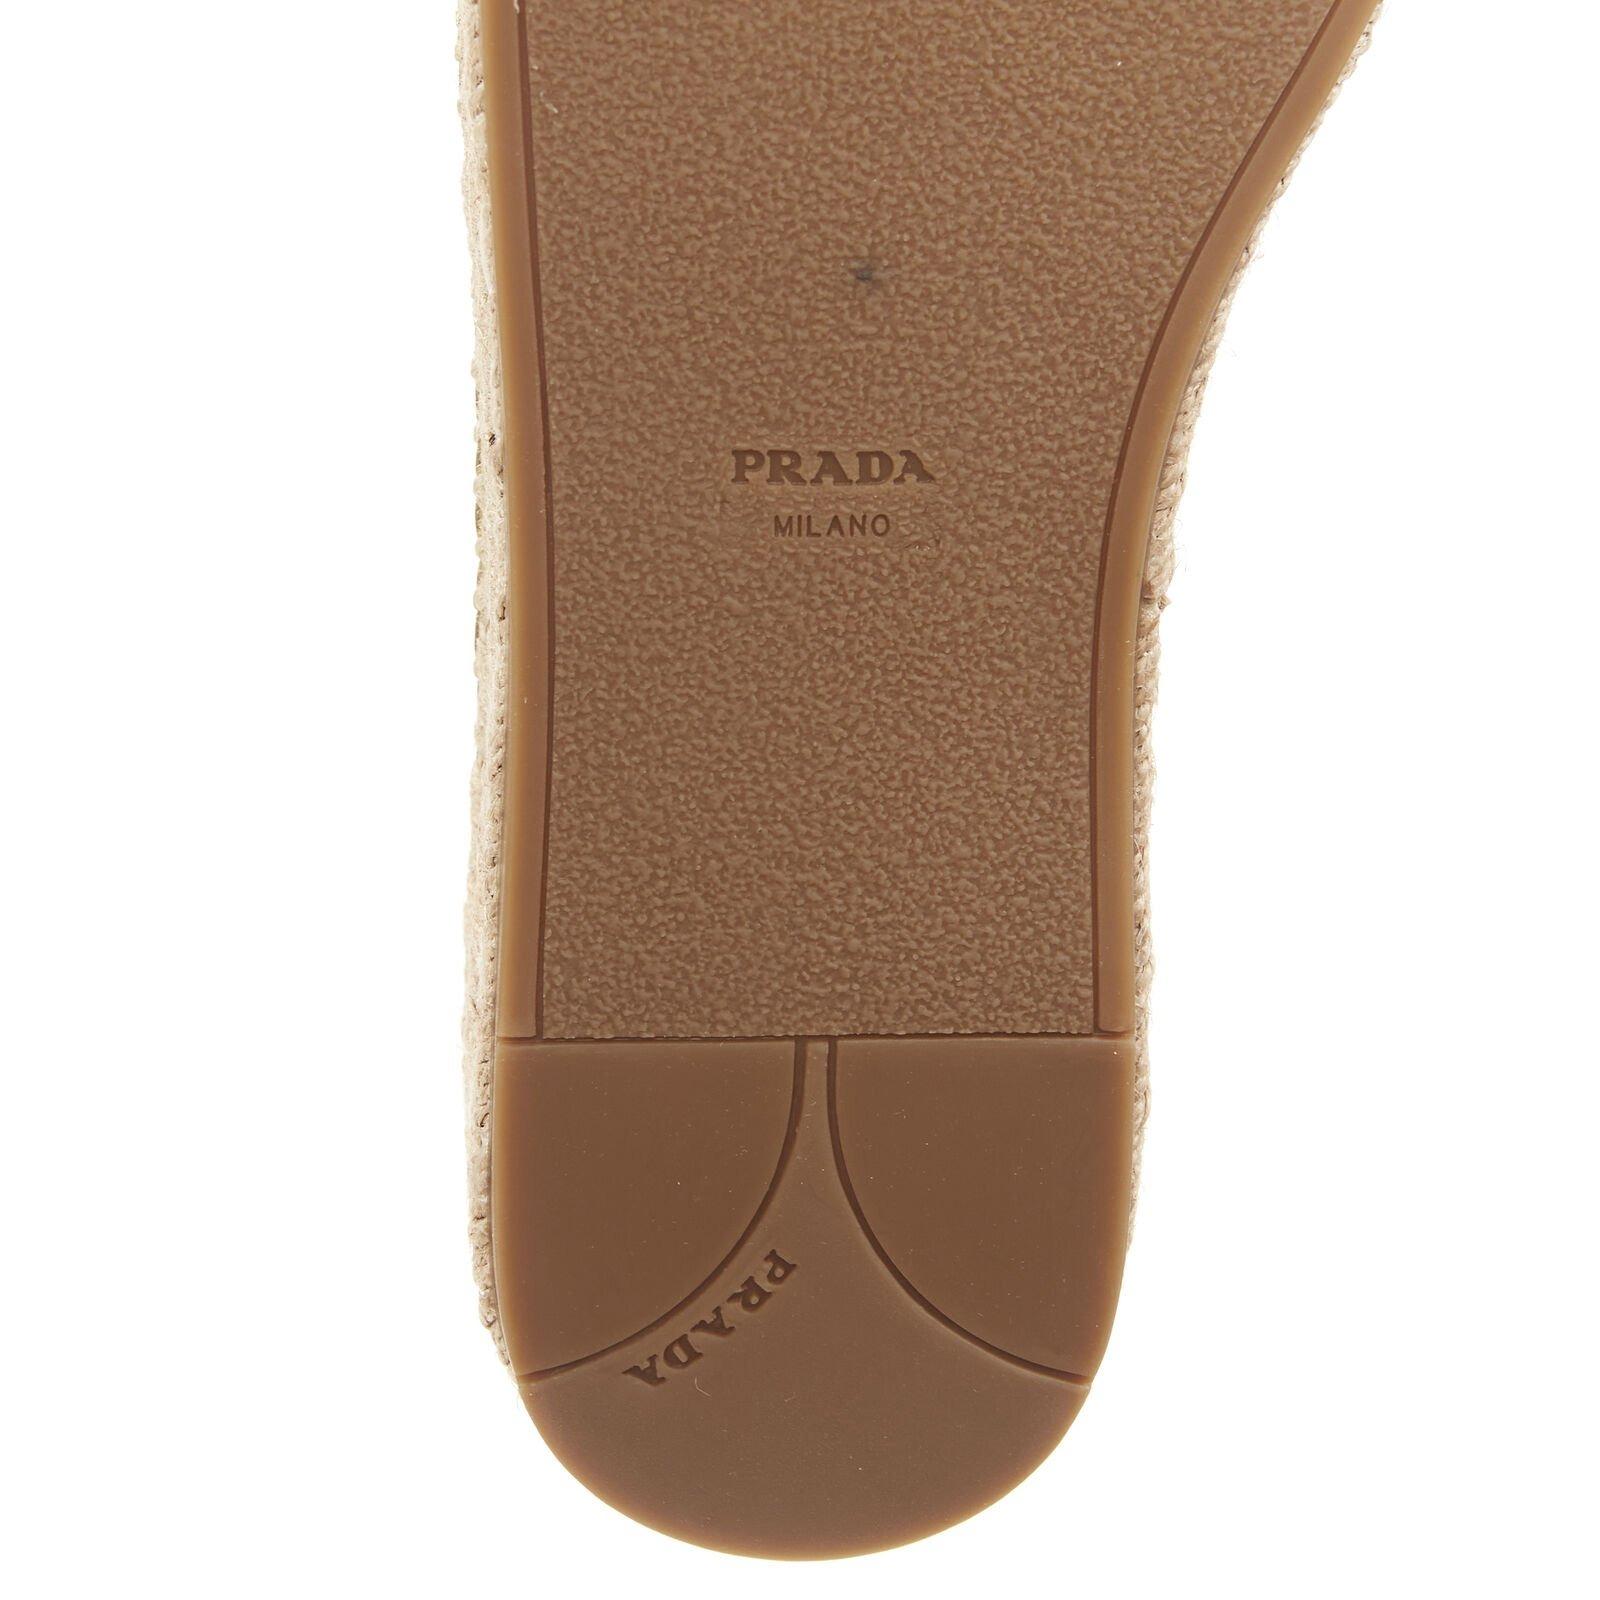 new PRADA metallic gold leather logo peep toe jute platform espadrille shoe EU37 7